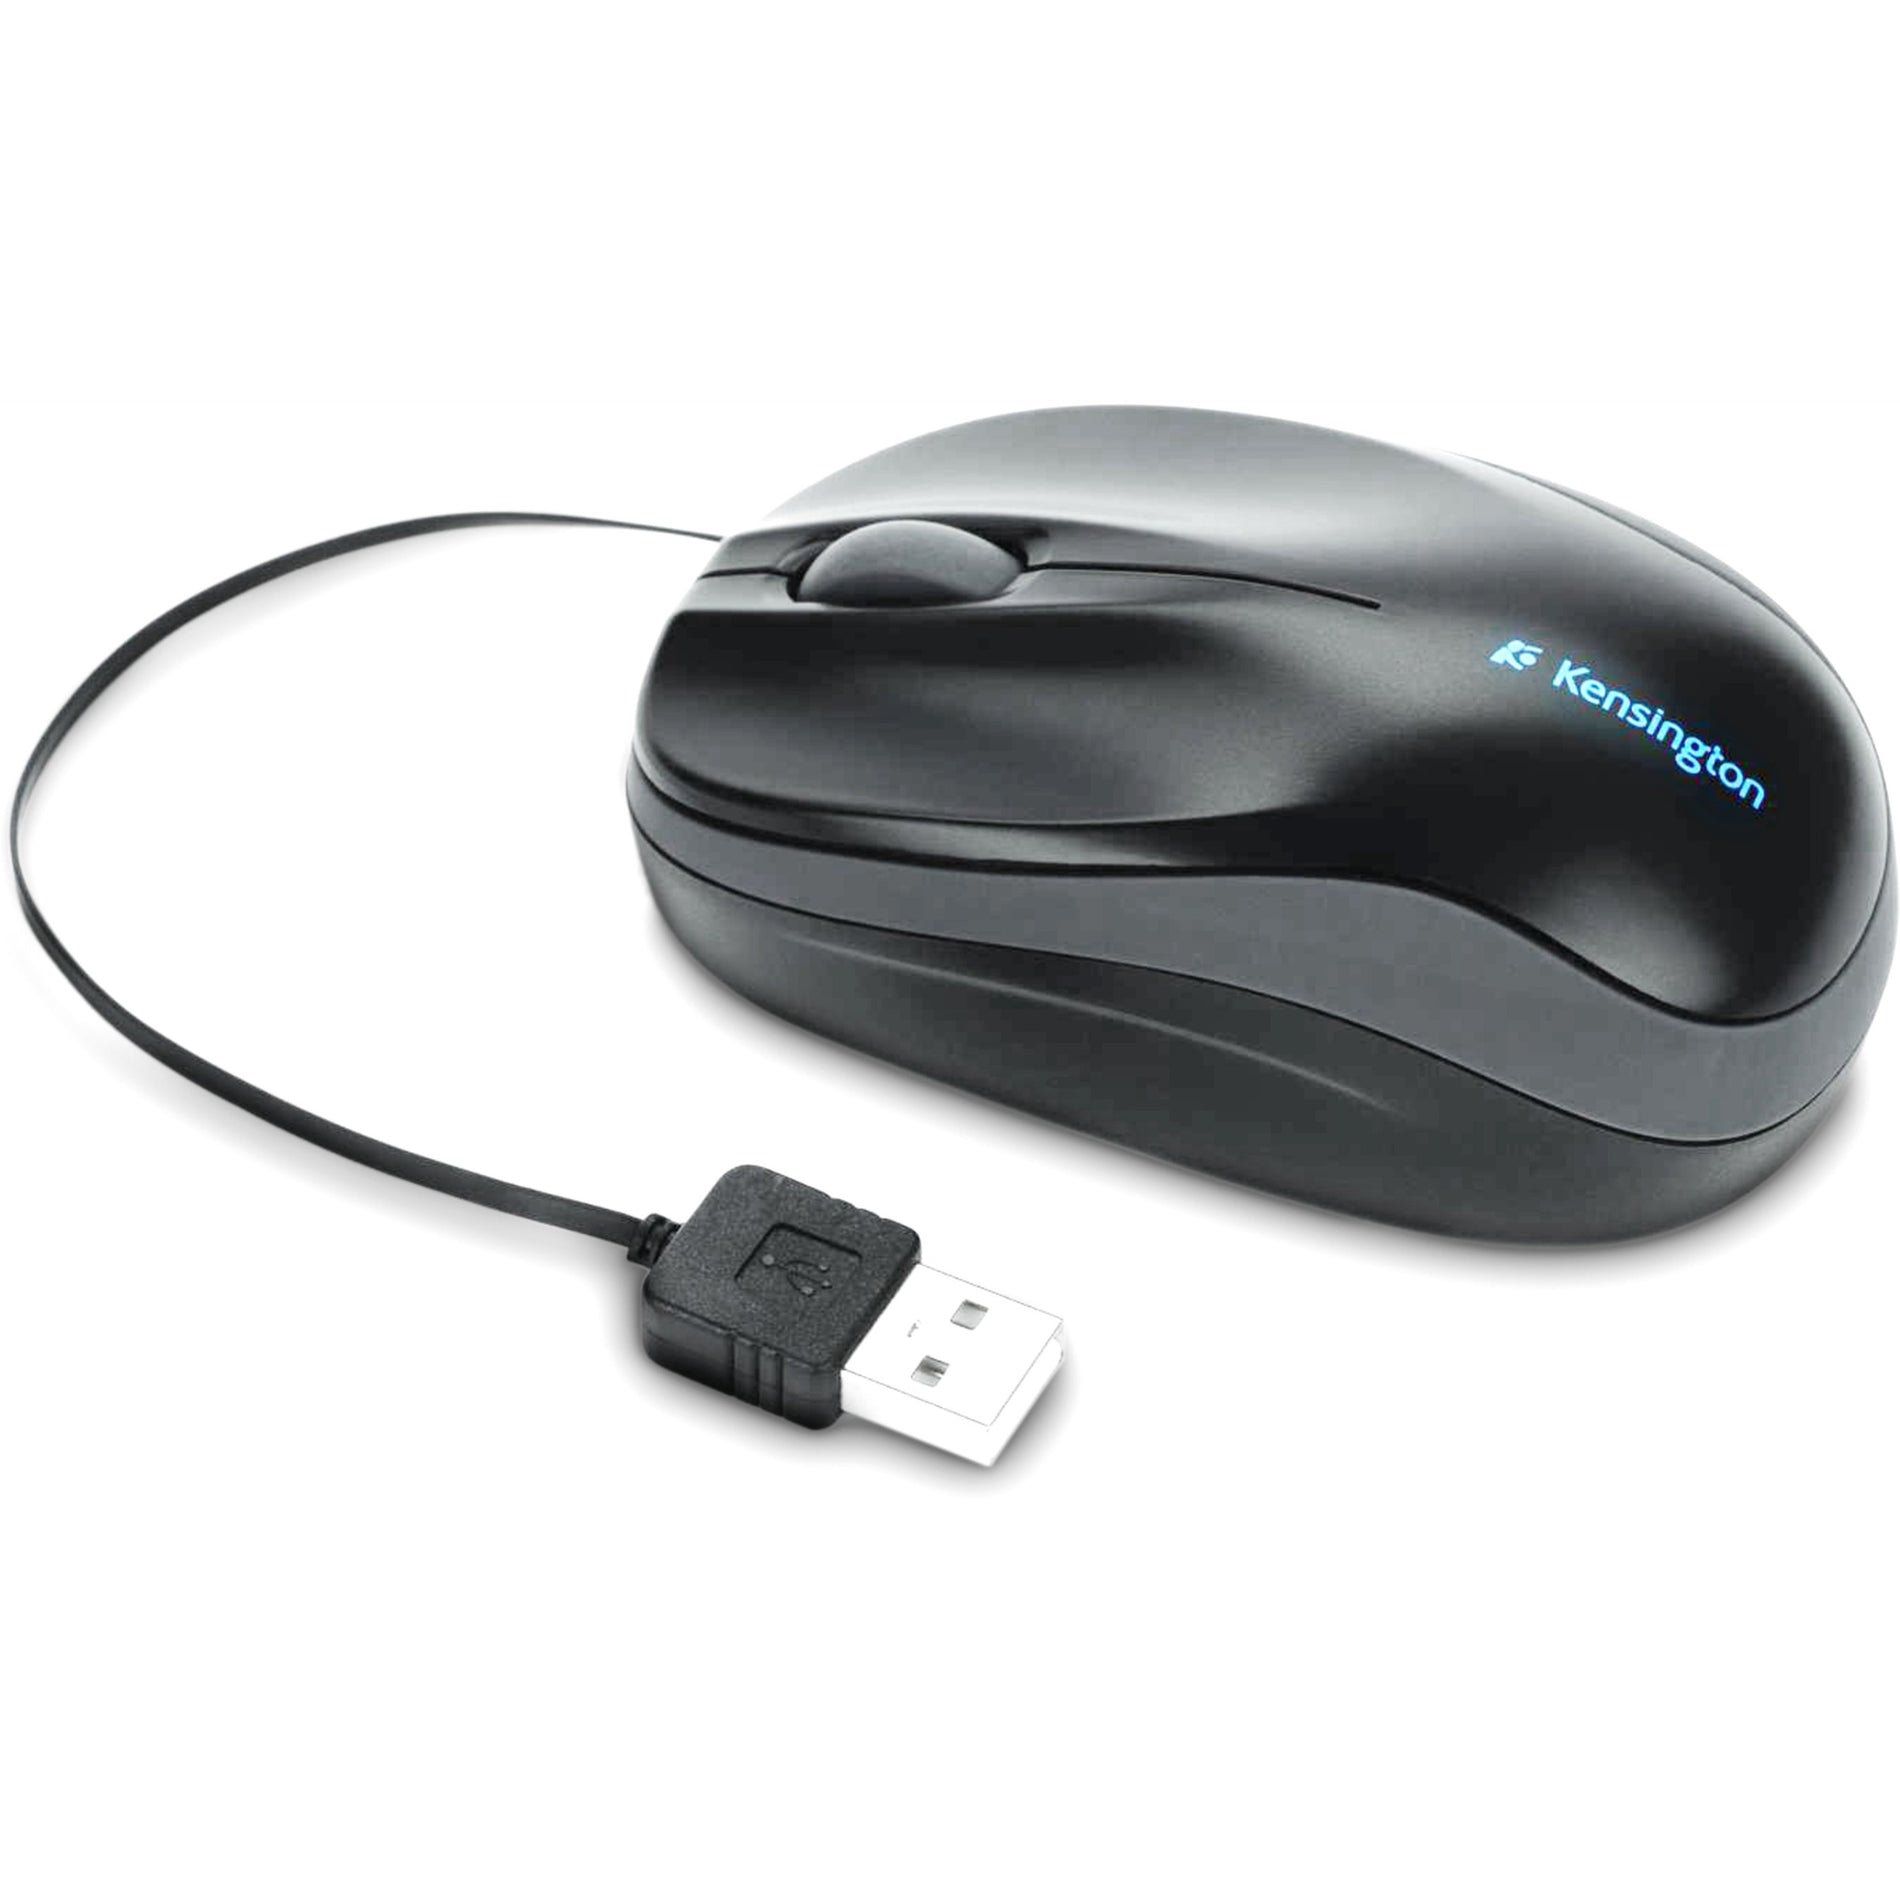 Kensington K72339USA Pro Fit Mobile Retractable Mouse, Black - 2 Year Warranty, USB Connectivity